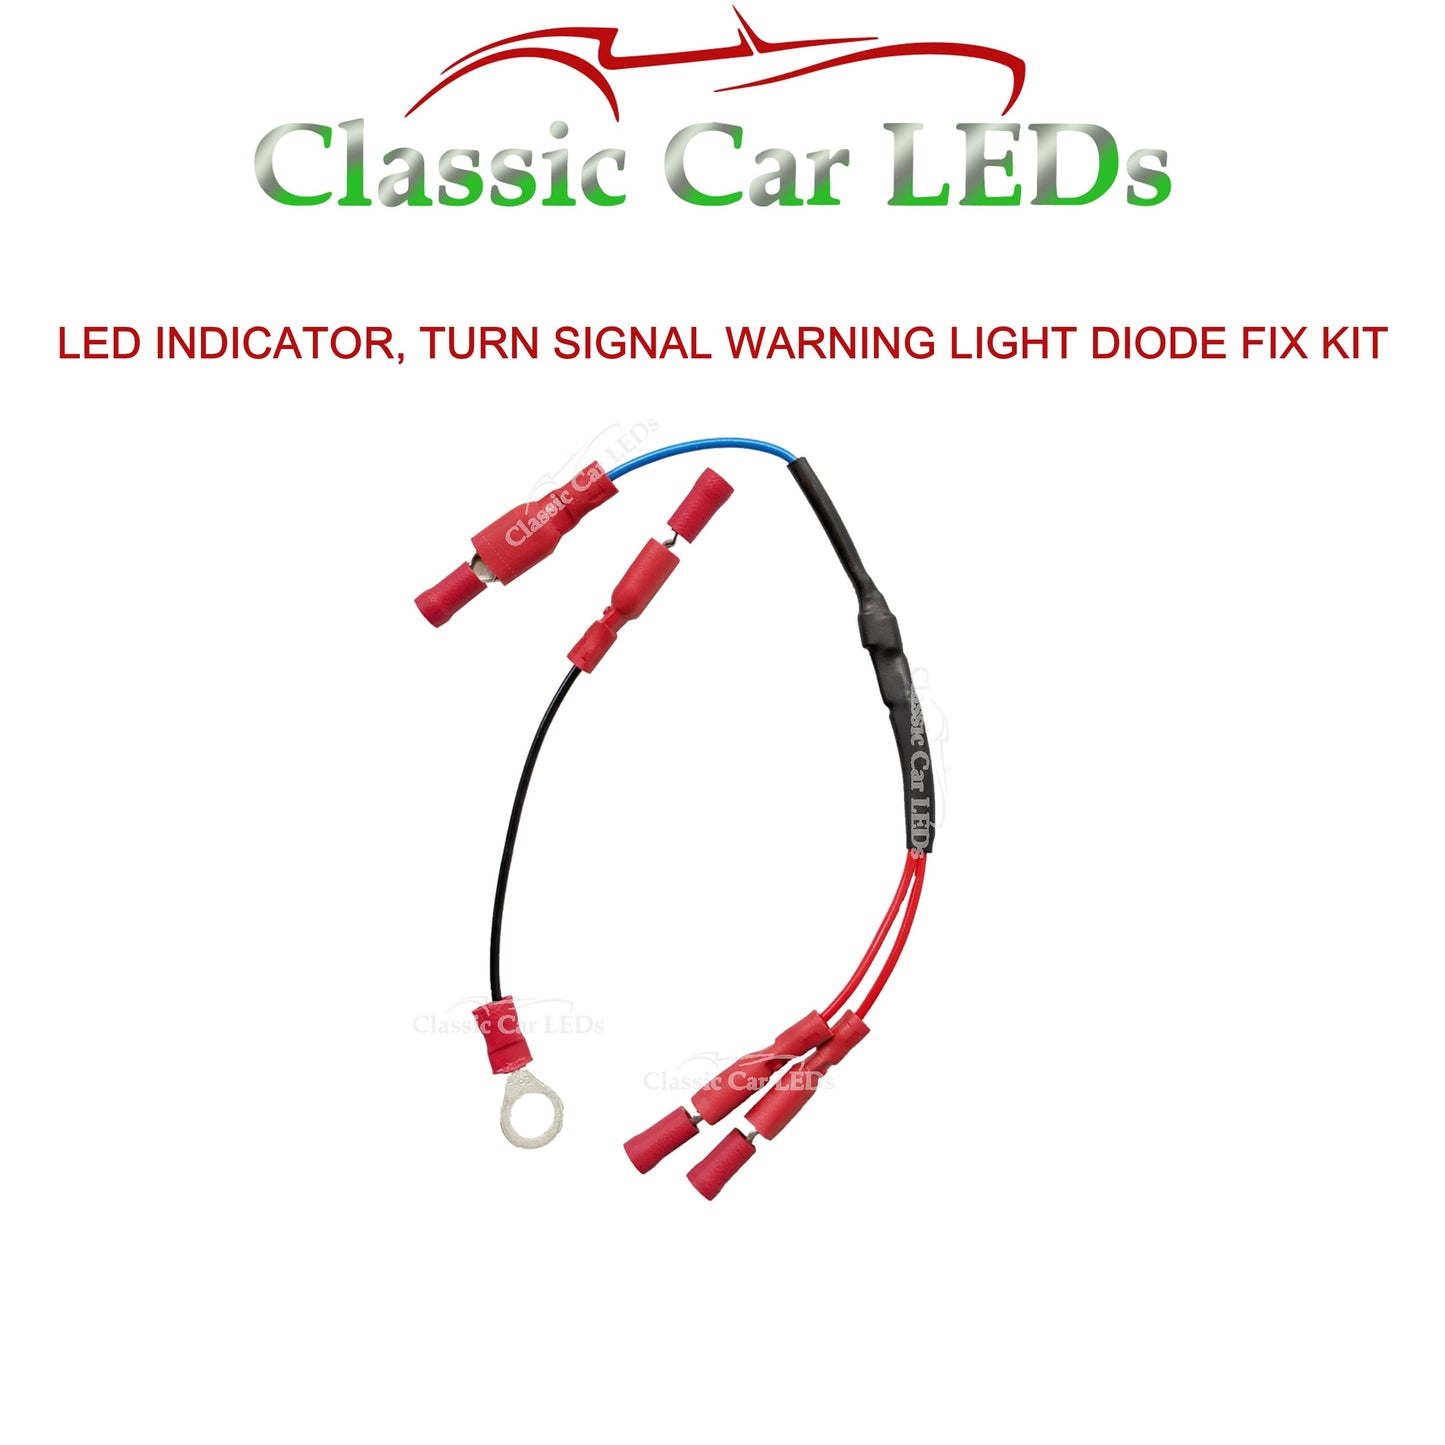 Diode Harness Kit for LED Indicator Turn Signal Warning Light Fix Kit